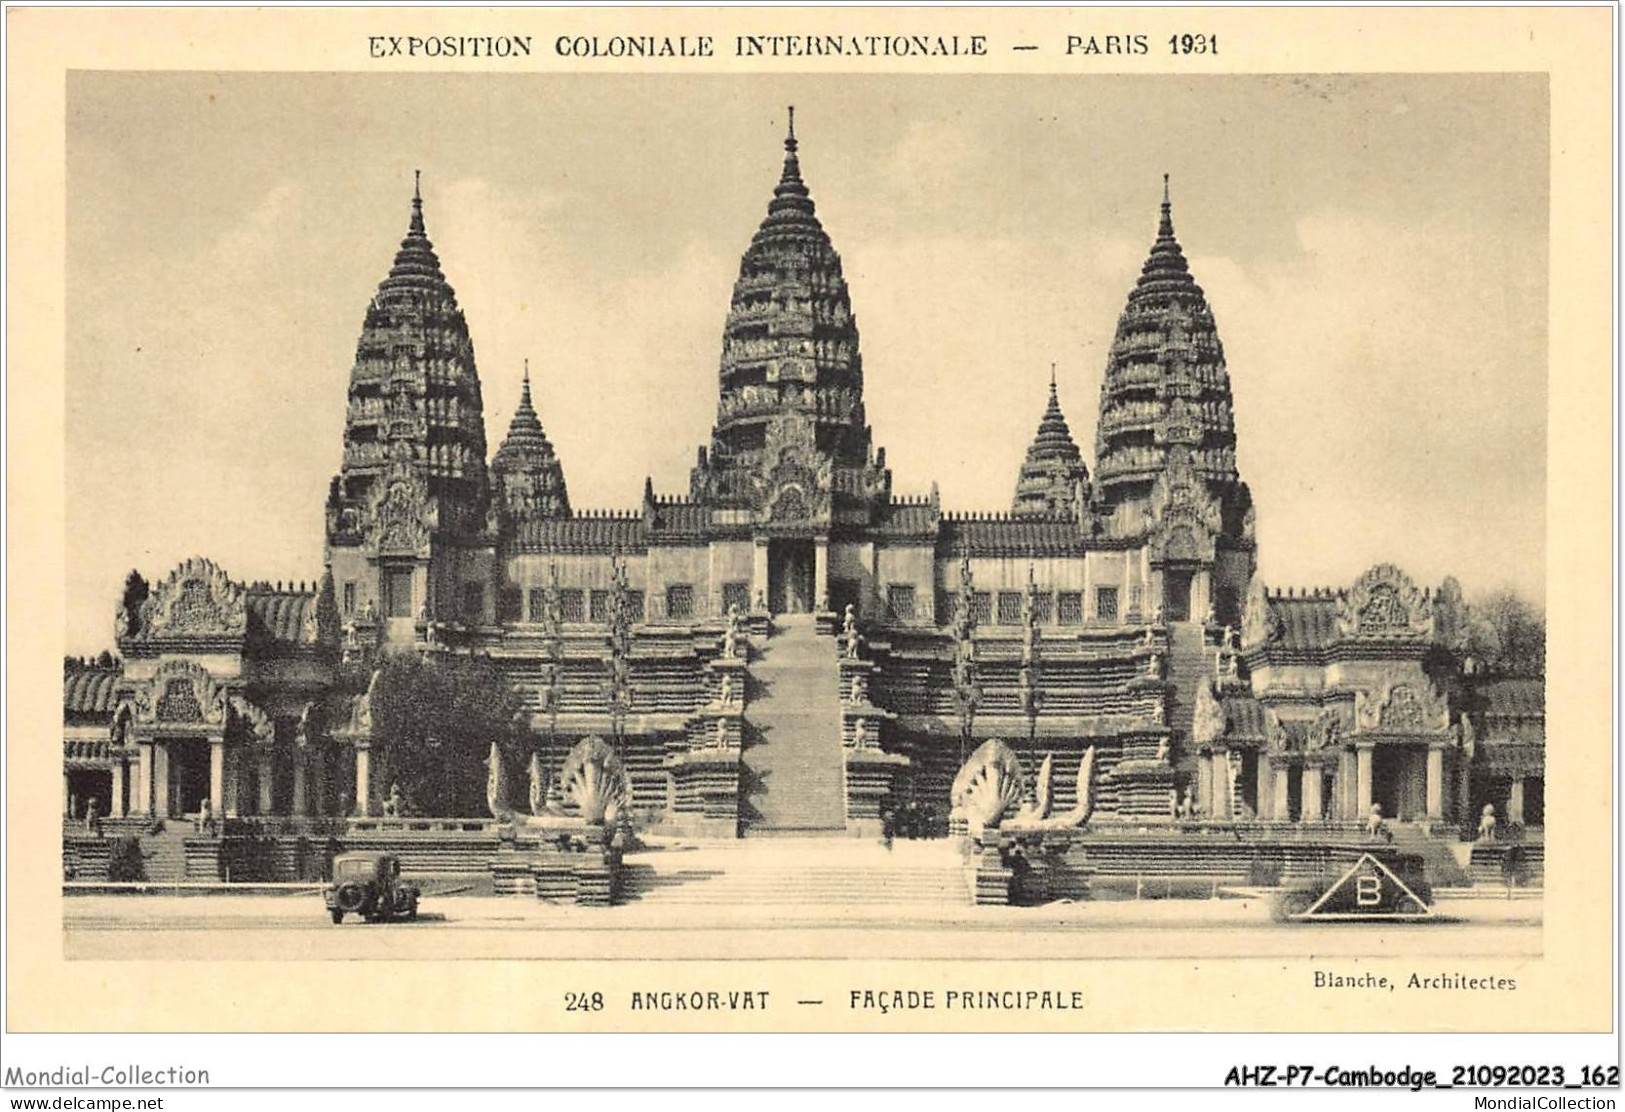 AHZP7-CAMBODGE-0677 - EXPOSITION COLONIALE INTERNATIONALE - PARIS 1931 - ANGKOR-VAT - FACADE PRINCIPALE - Kambodscha